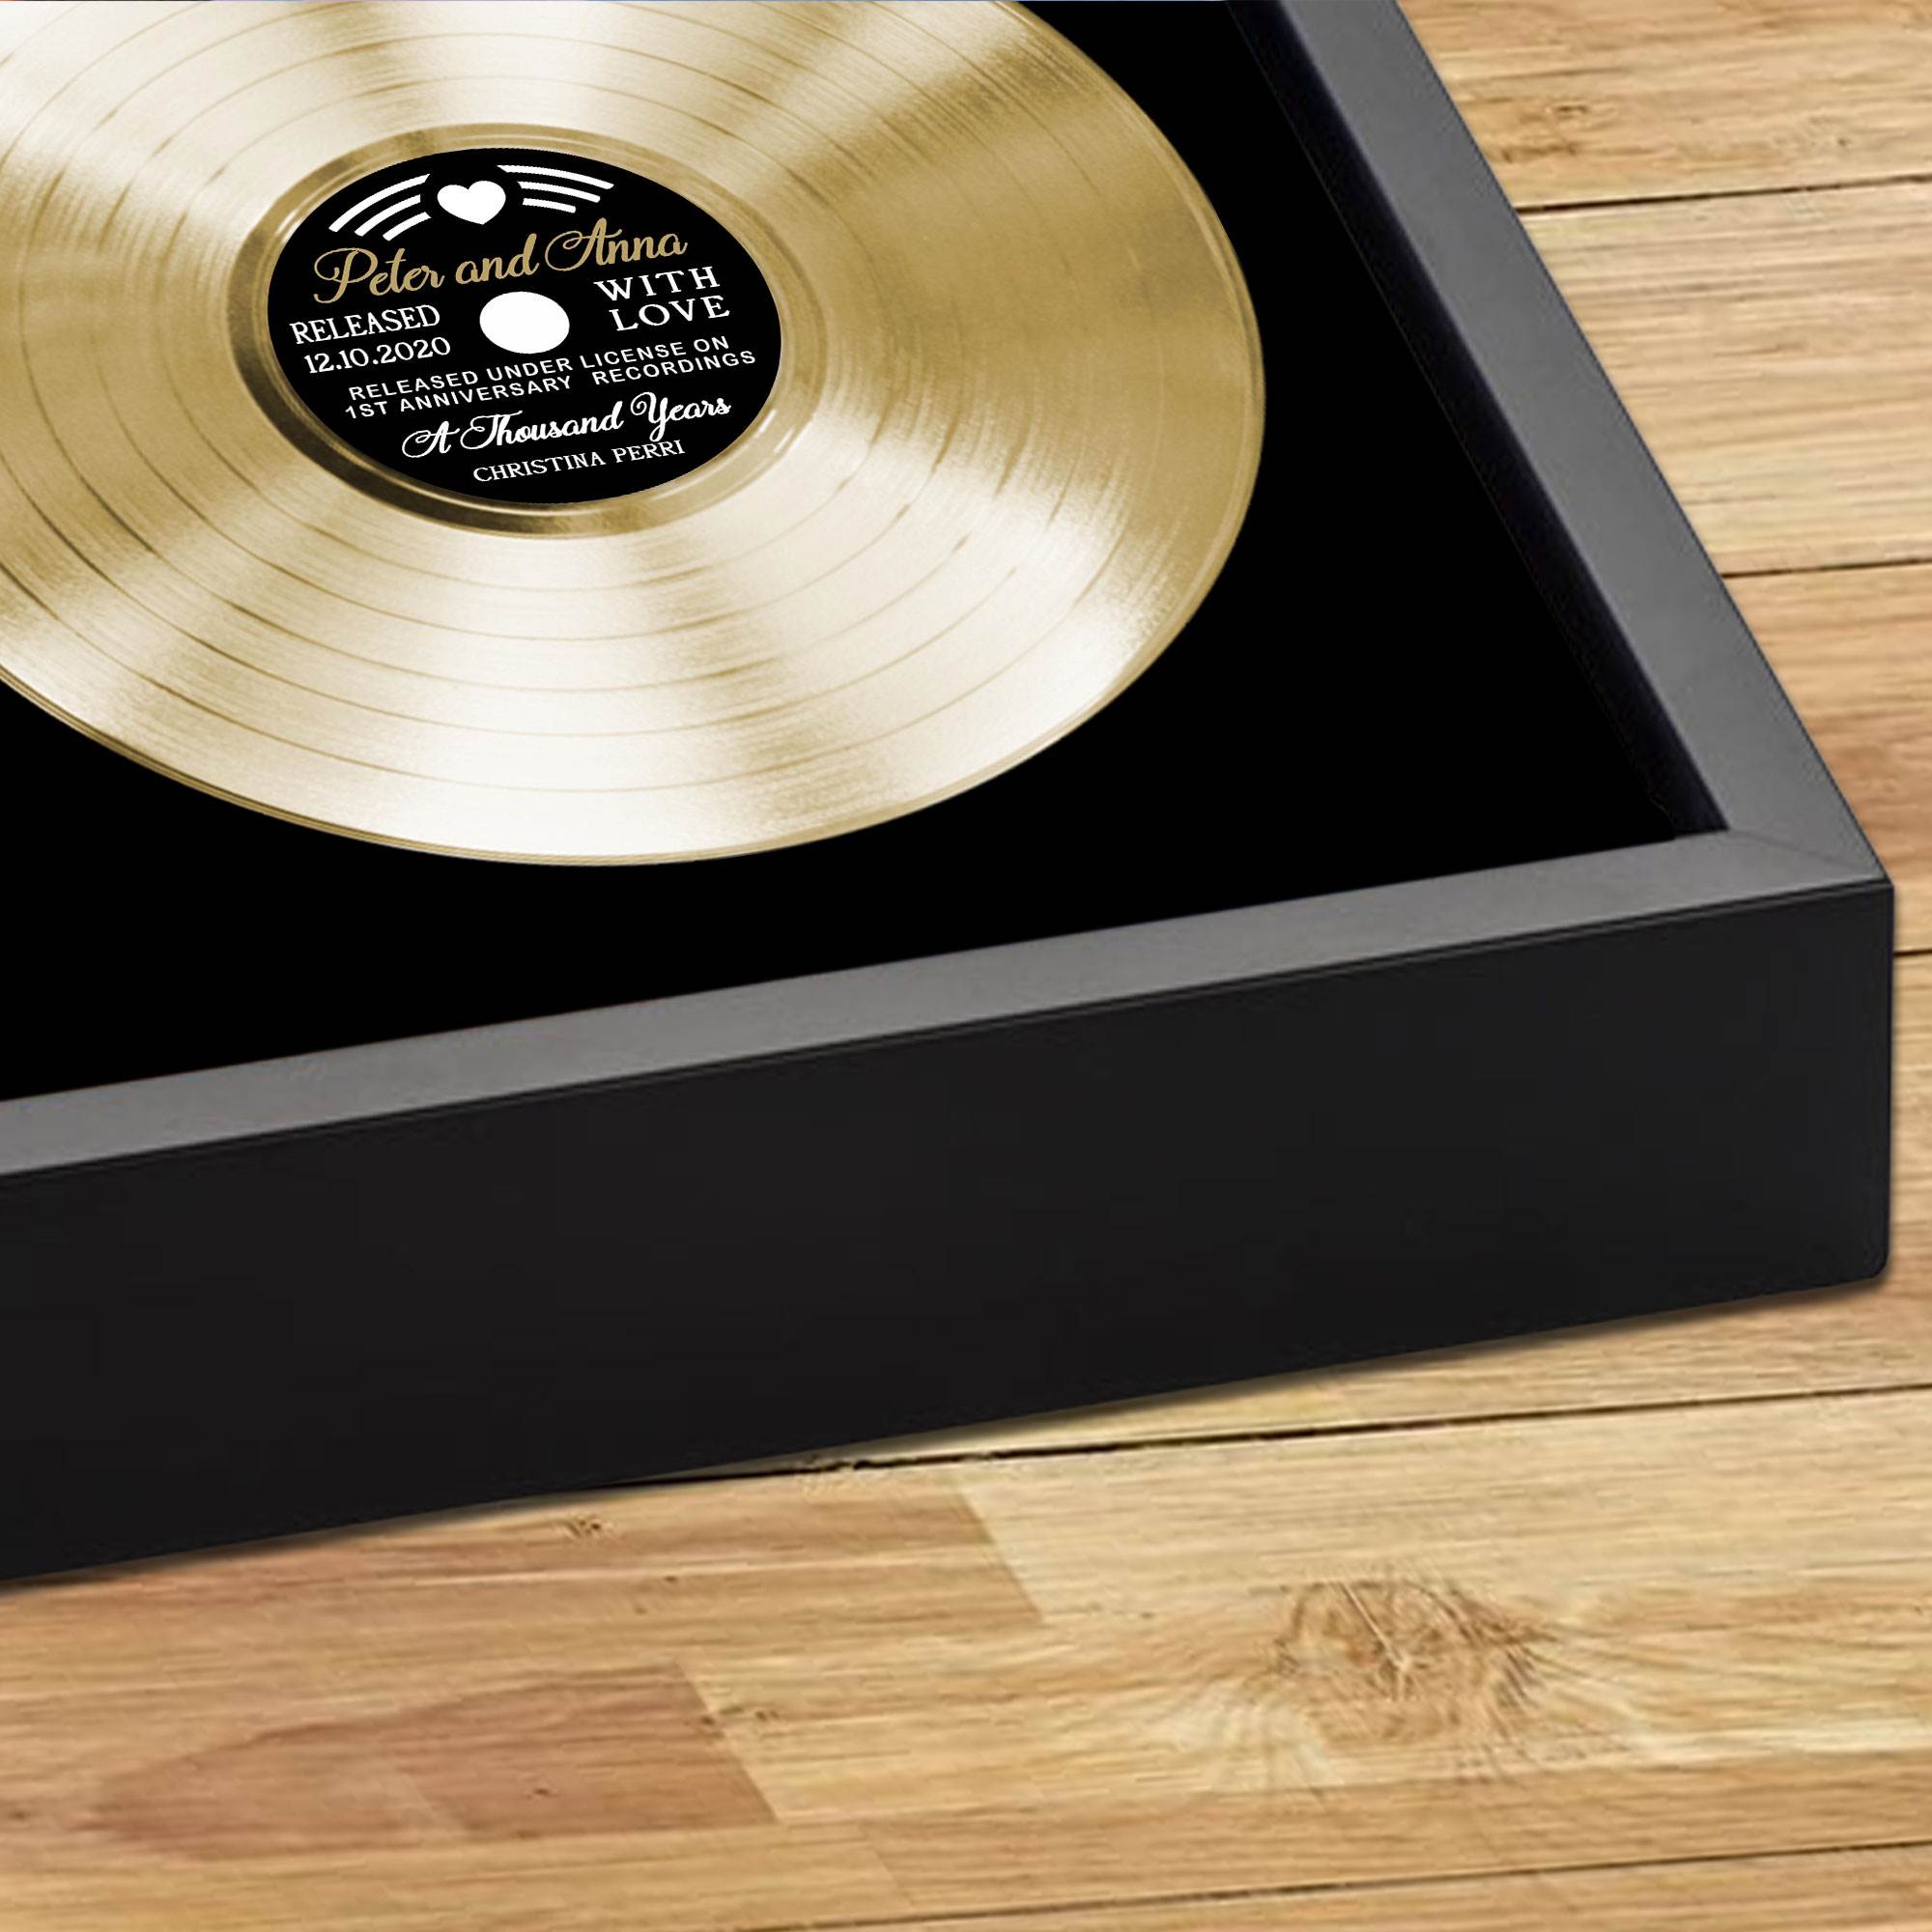 8th Wedding Anniversary Gifts, Custom Vinyl Record 8 Year Anniversary Gift, Bronze Anniversary Gifts